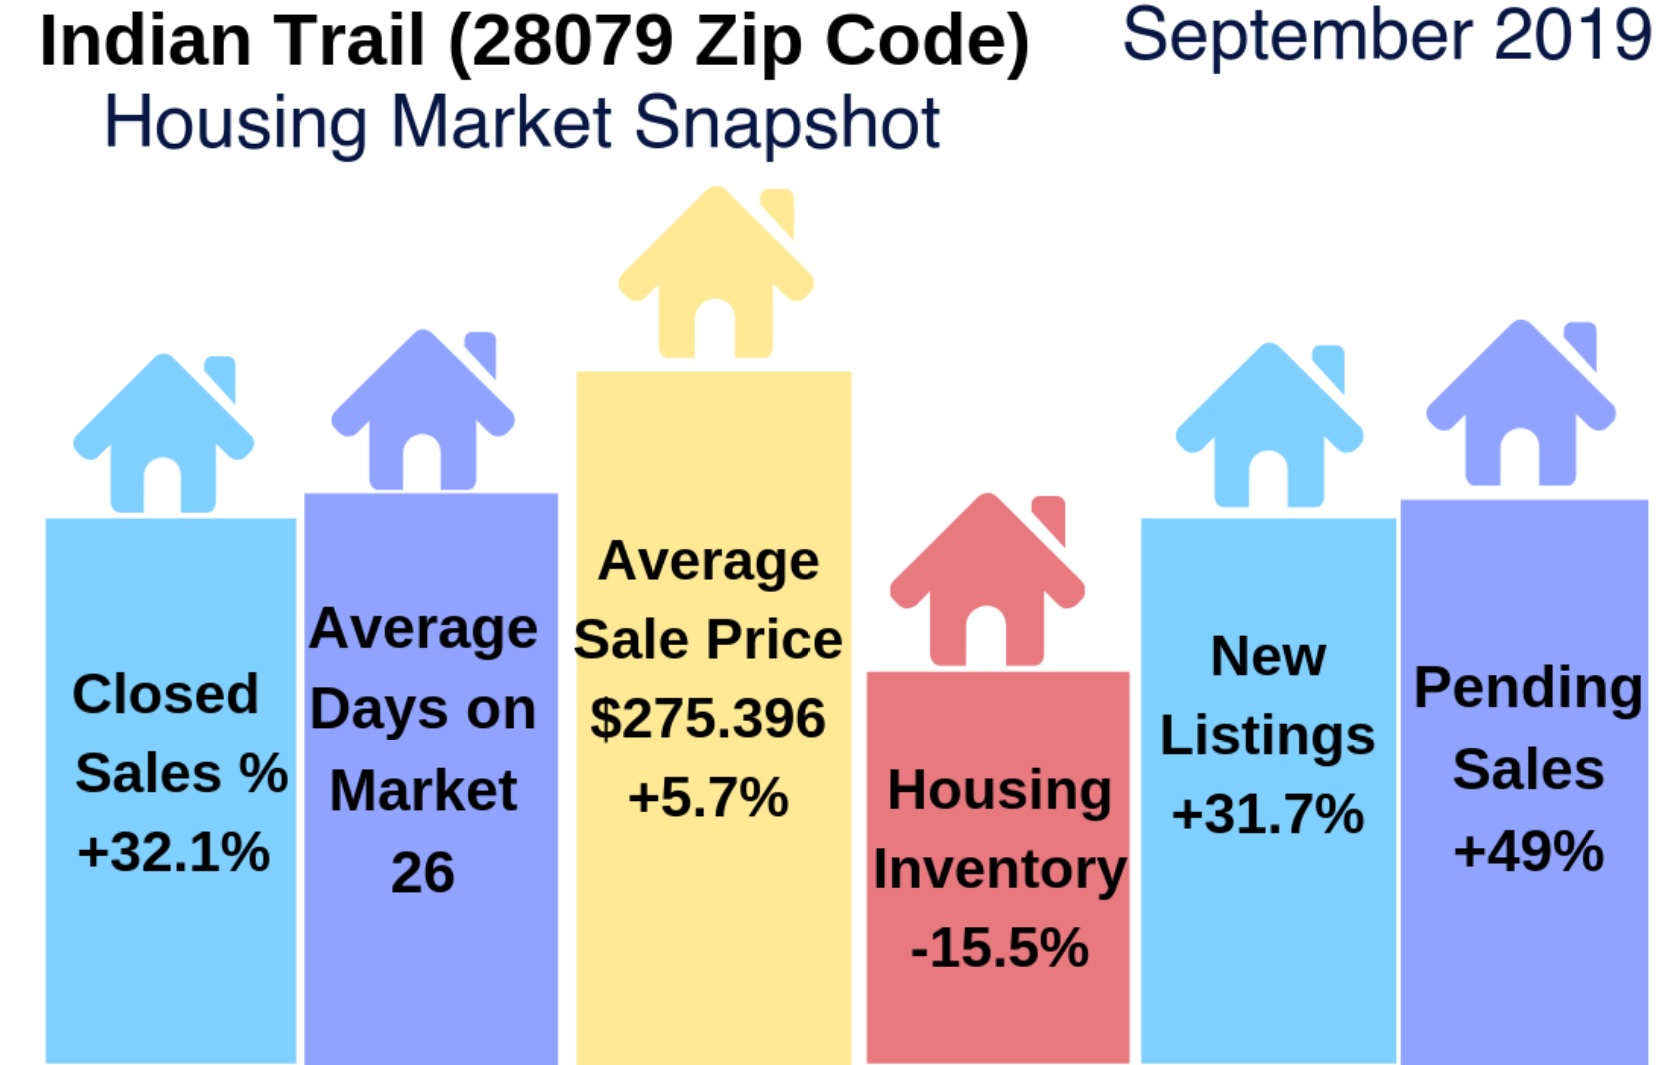 Indian Trail (28079 Zip Code) Real Estate Report: September 2019